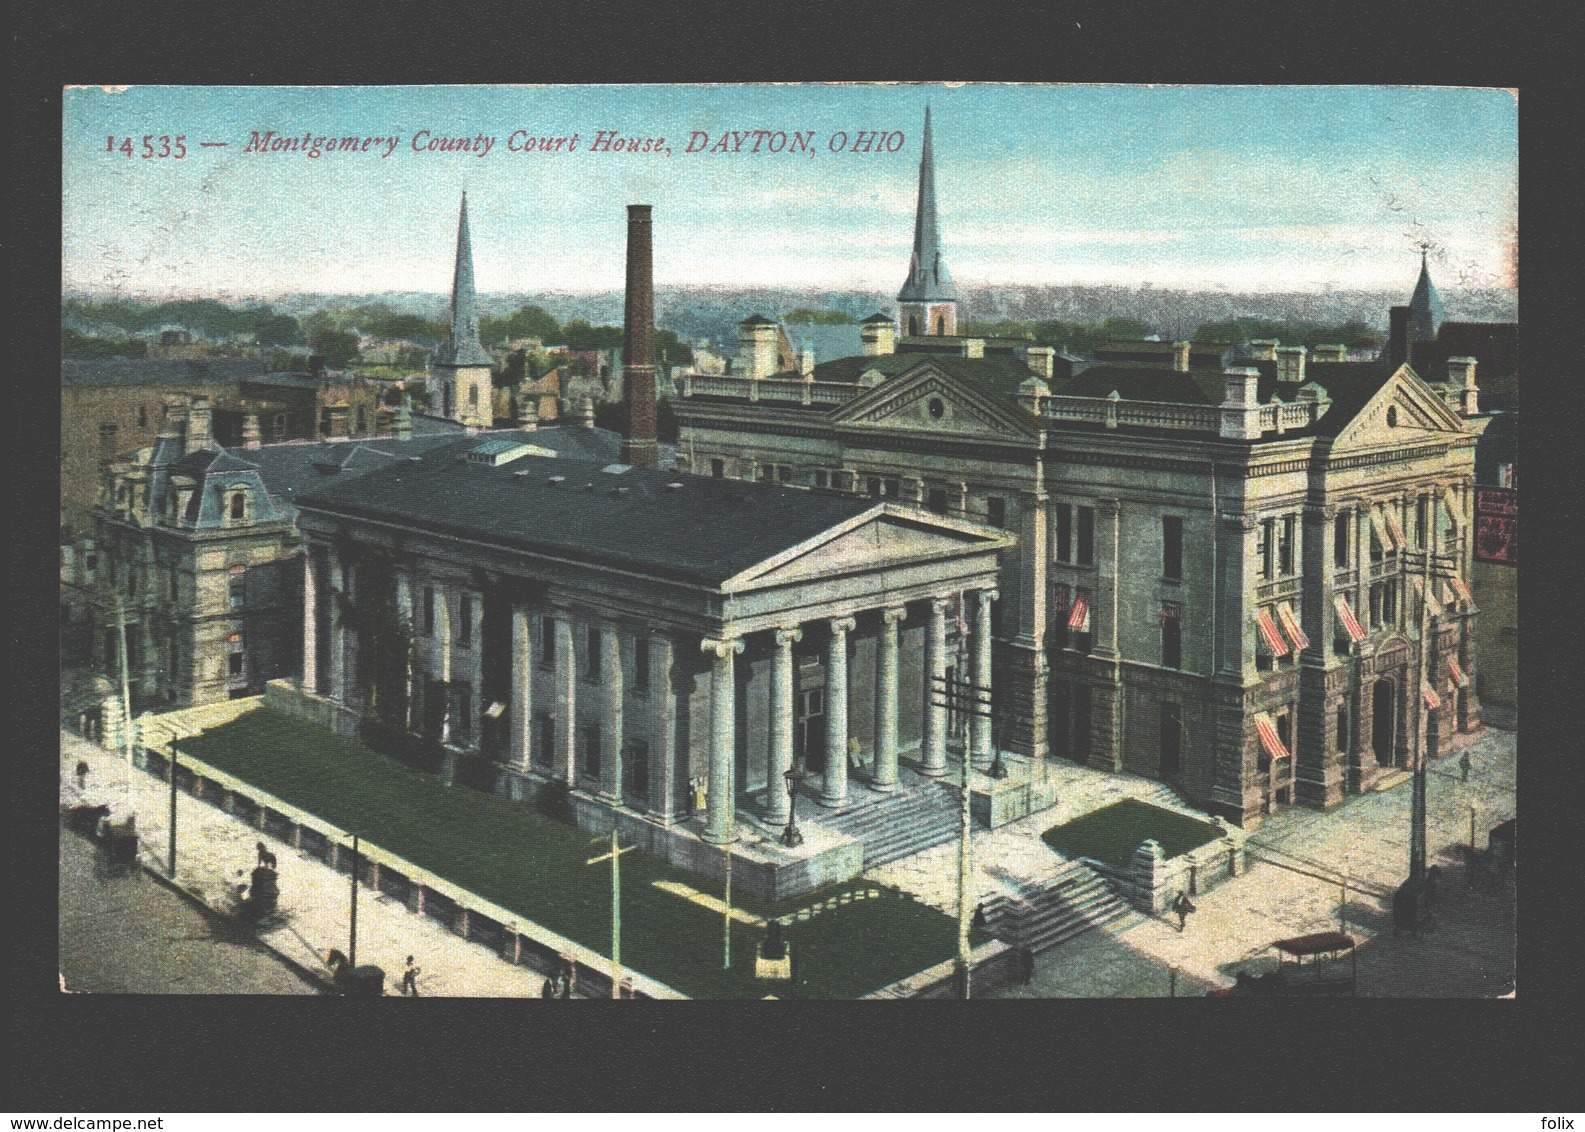 Dayton - Ohio - Montgomery County Court House - Dayton